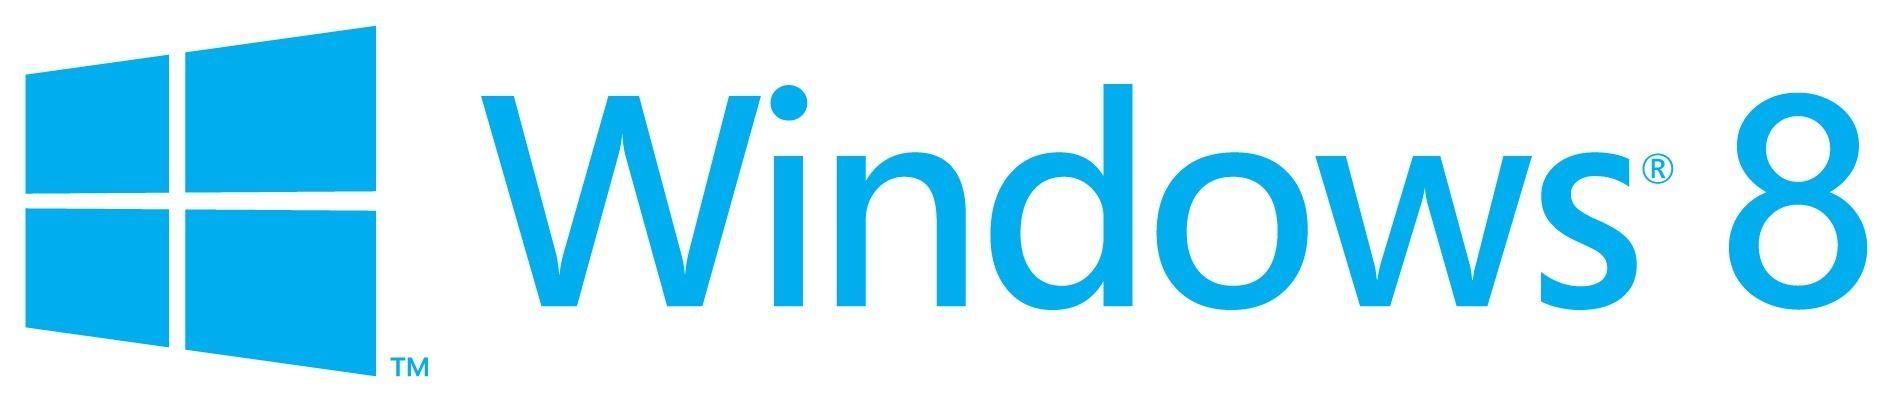 New Microsoft Windows Logo - New Windows 8 Logo Is Pure Genius | PCWorld